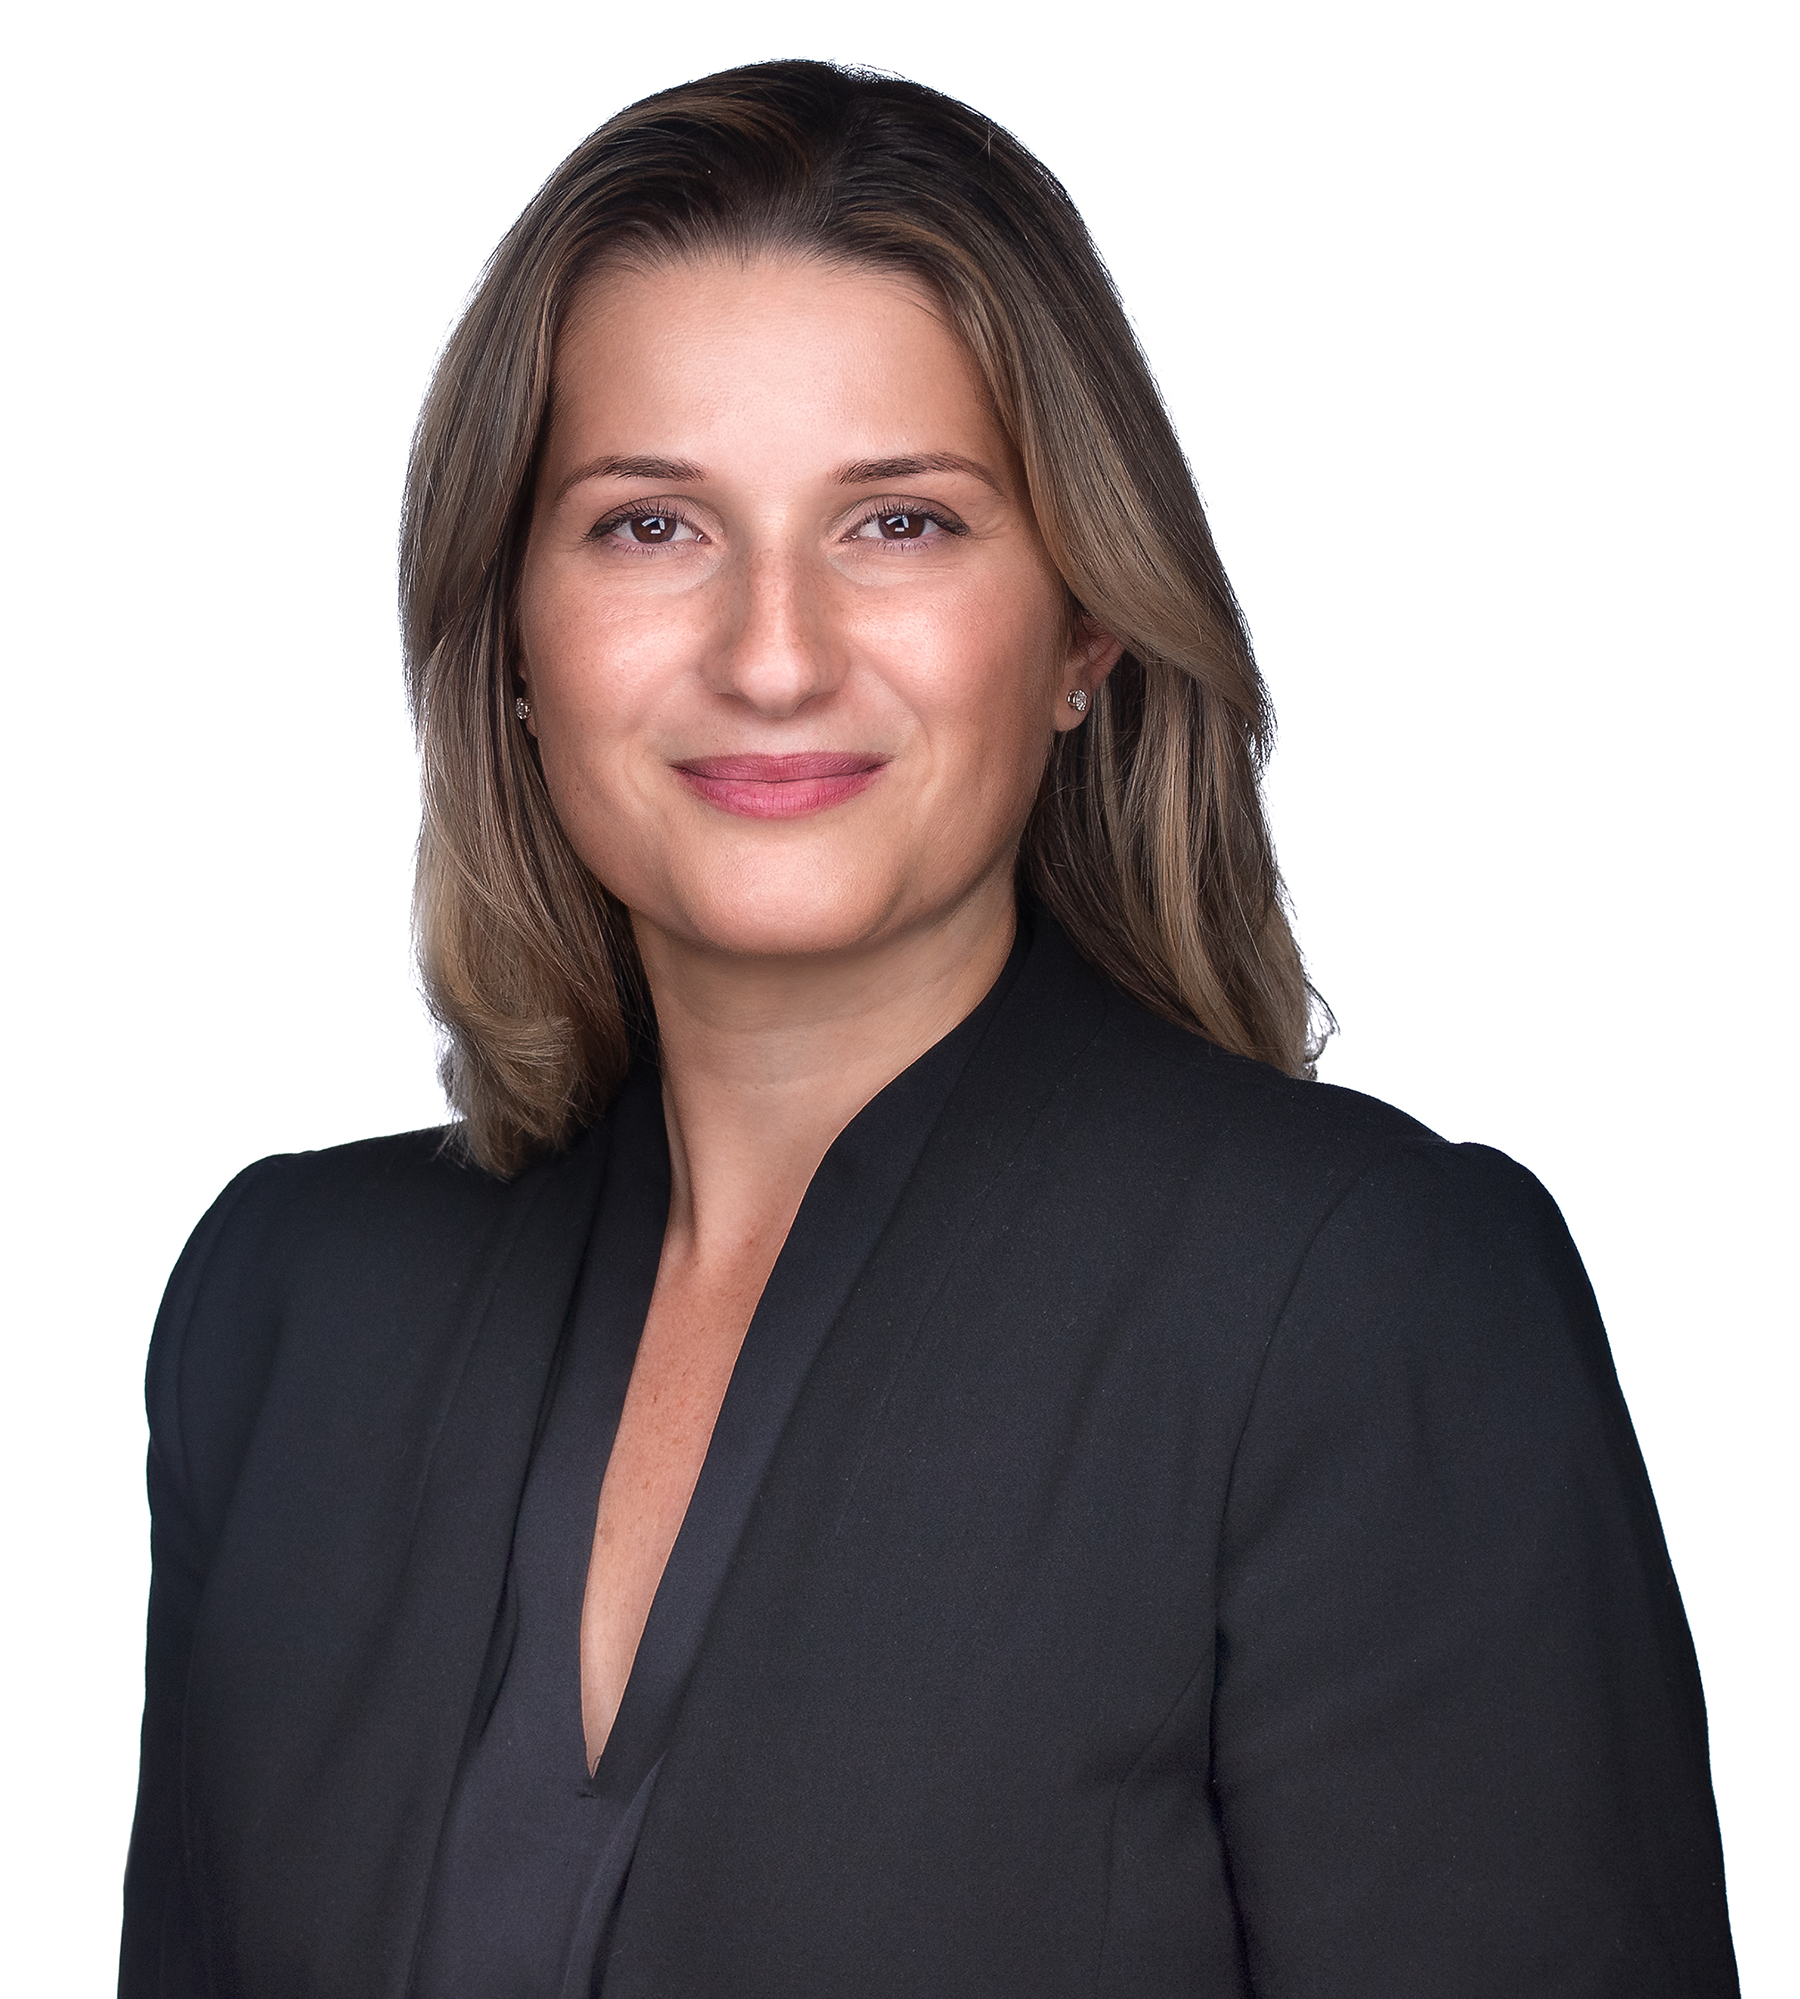 Hara Gisholt, Director, Maritime & Legal Affairs